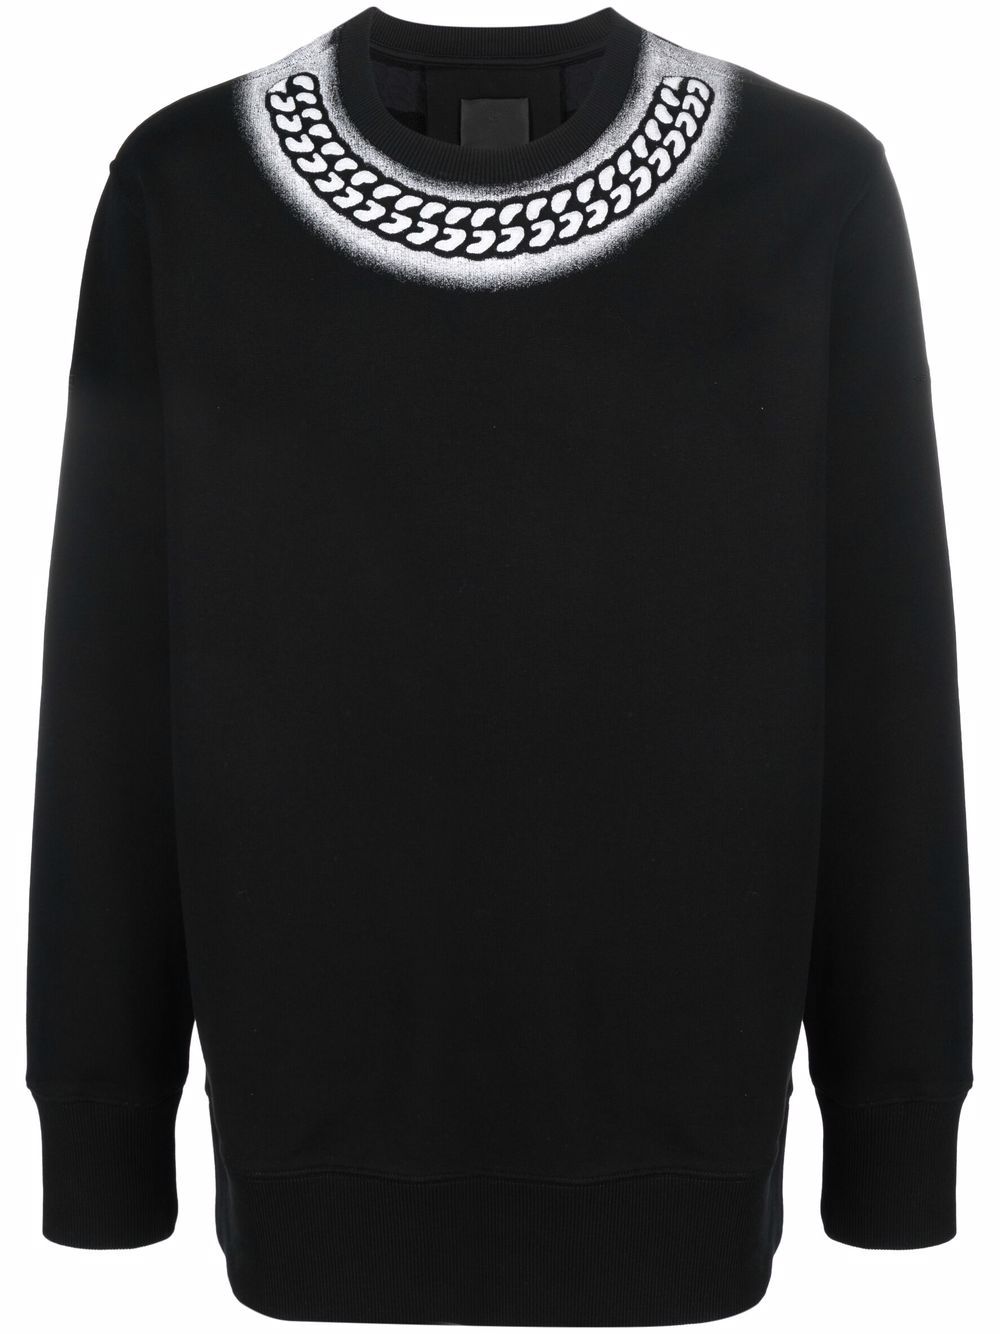 Givenchy x Chito Embossed Chain Print Sweatshirt - Farfetch